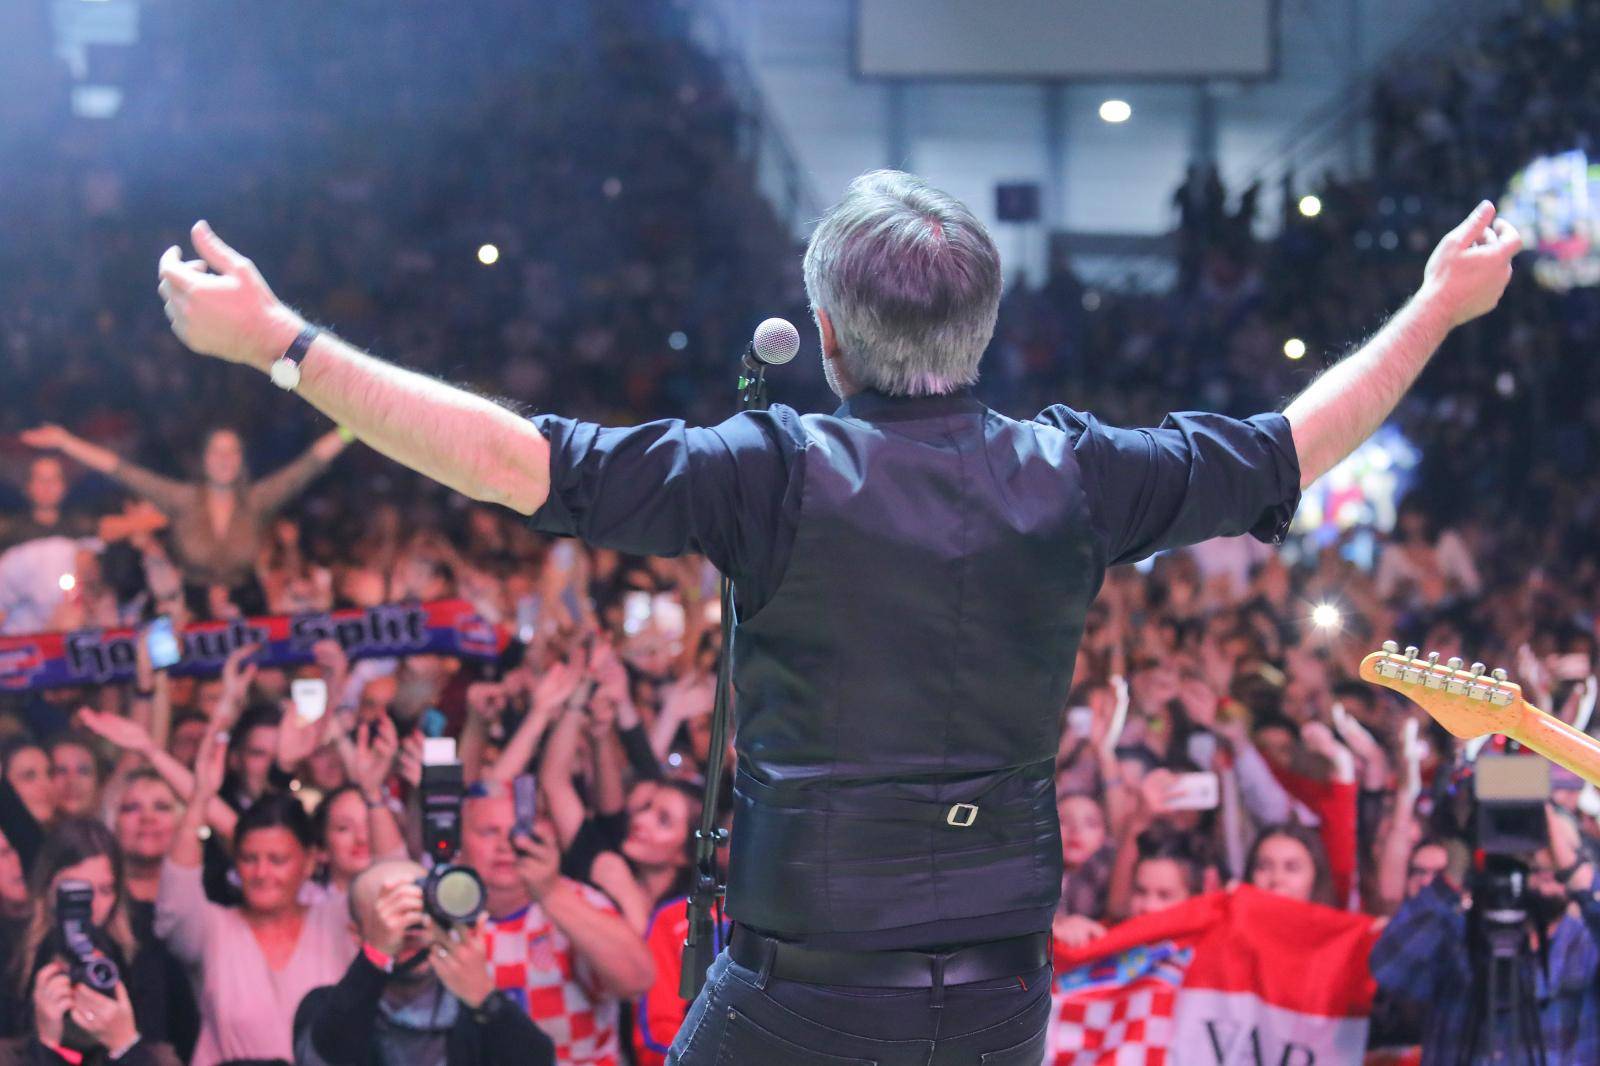 Škoro zapjevao ispred 12.000 ljudi: 'Budite ponosni Hrvati'